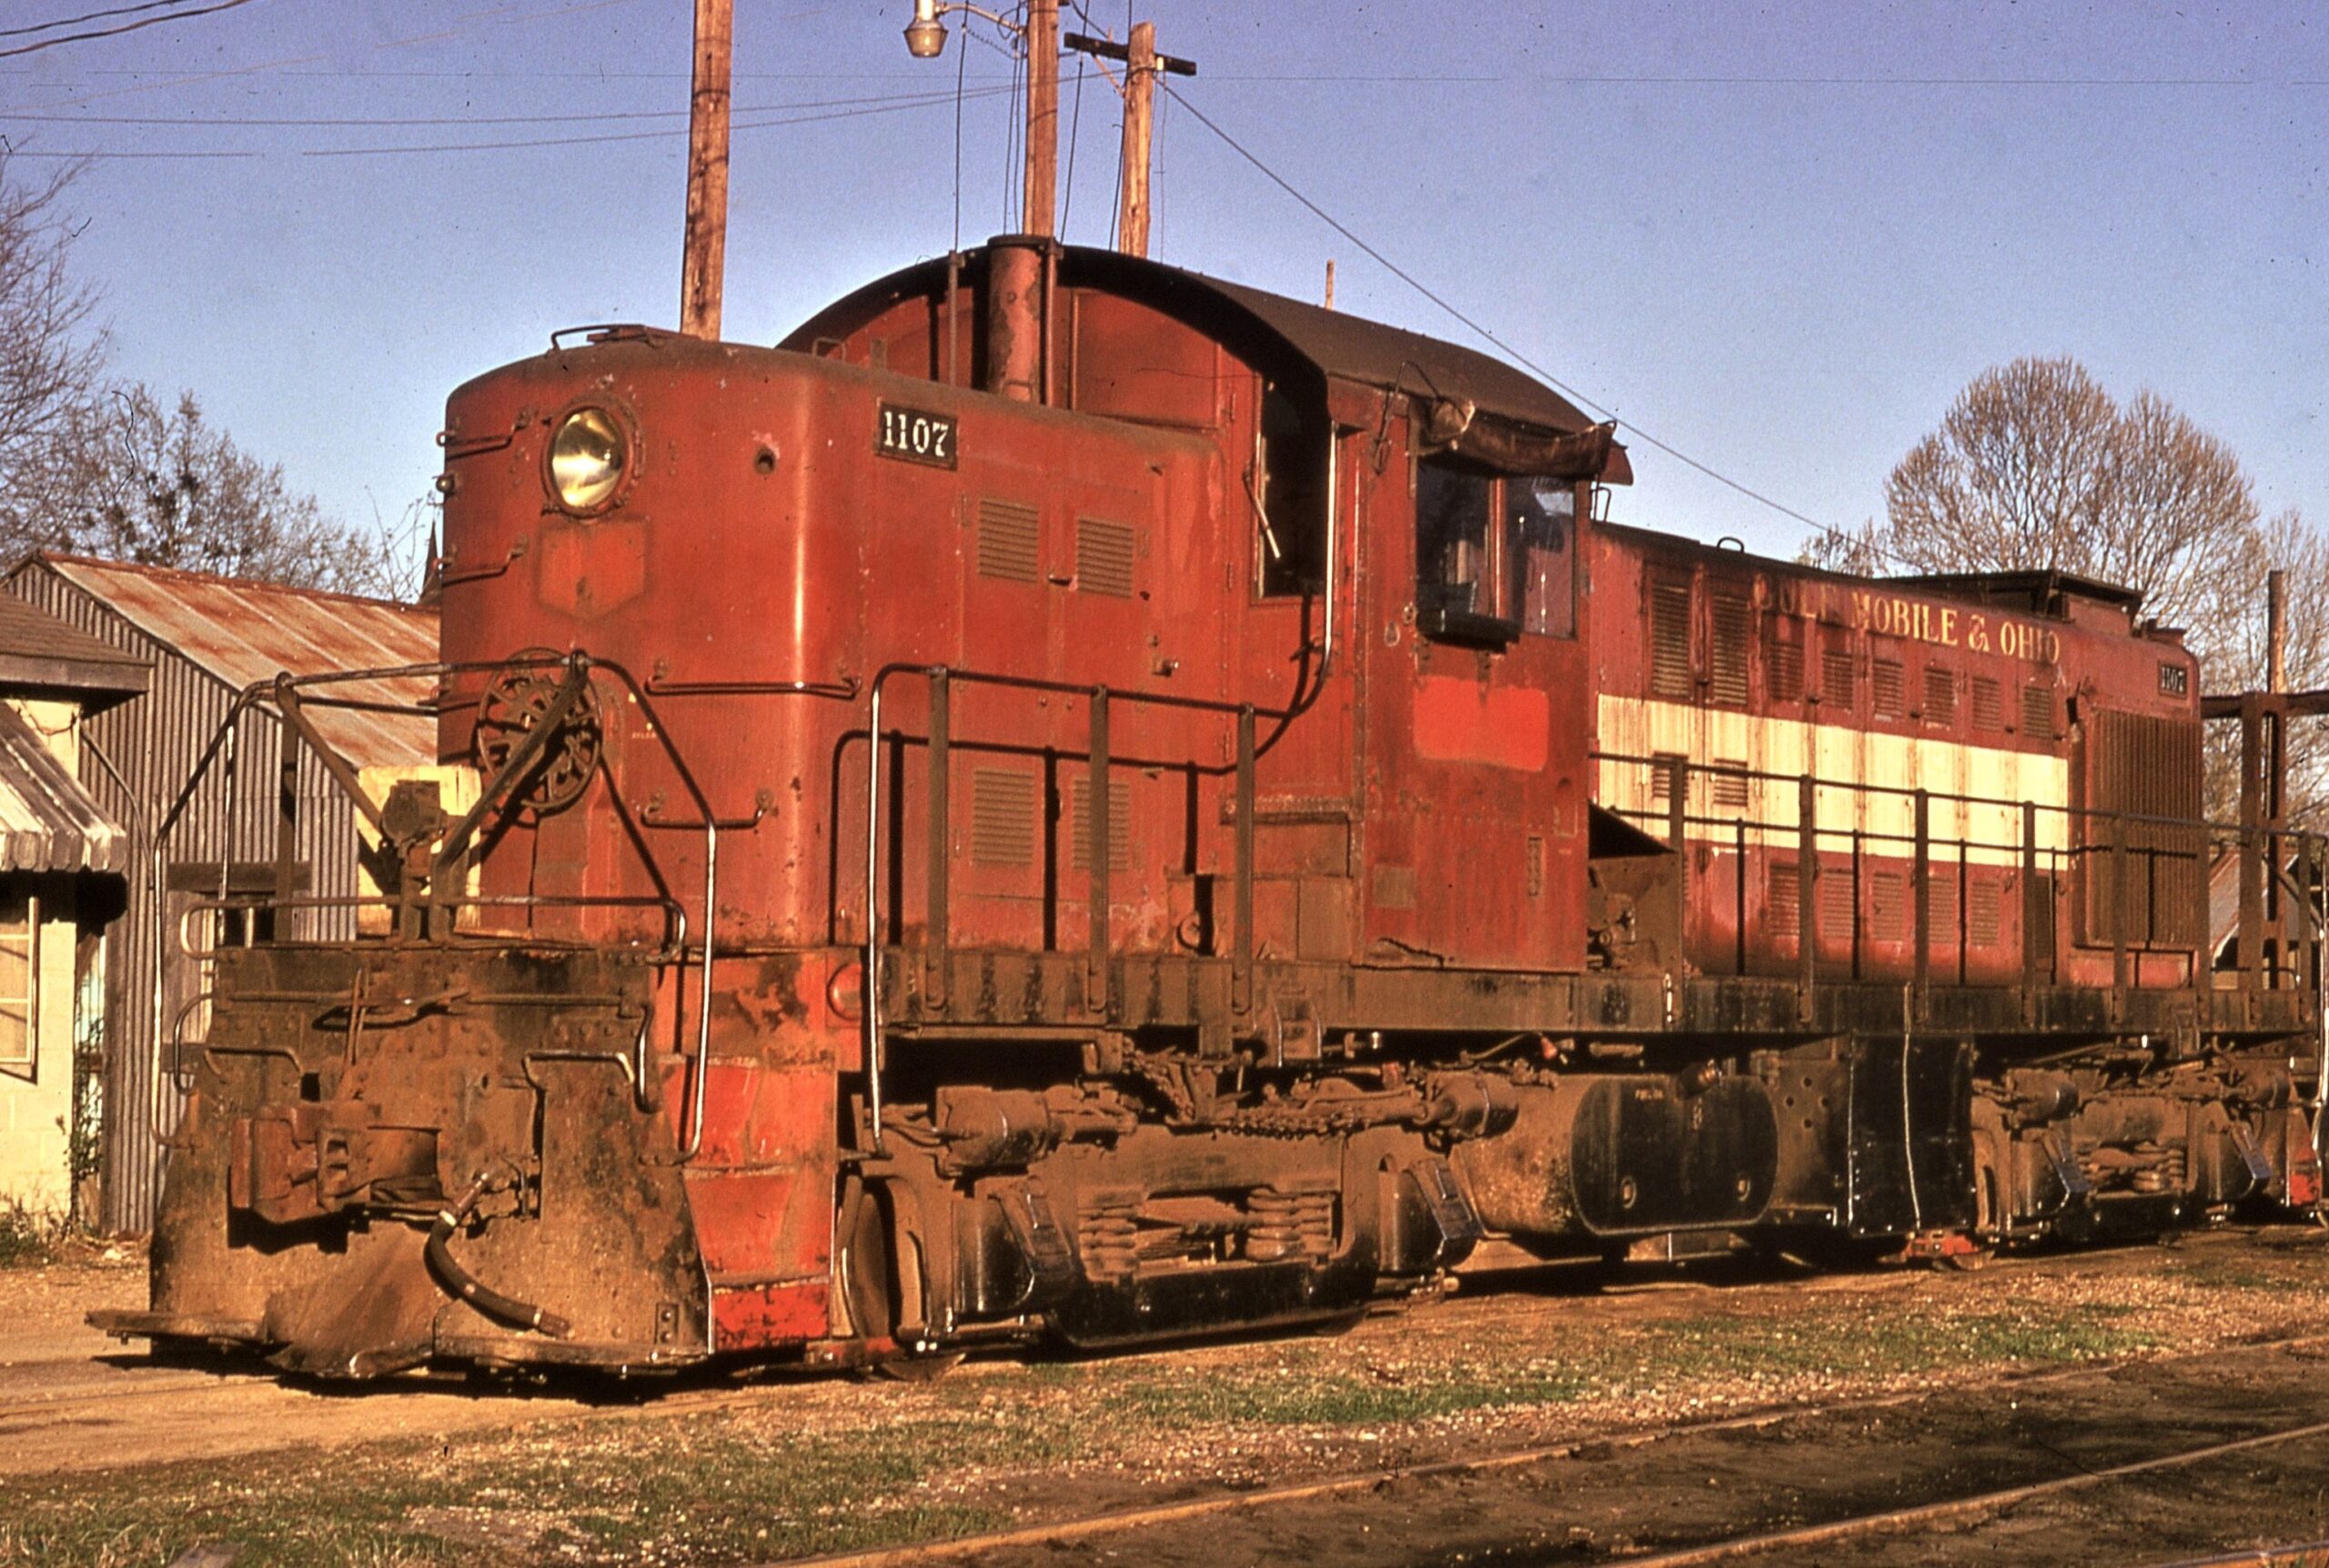 Louisiana Midland | Vena, Louisiana | Class RS1 #1107 diesel-electric locomotive | ex-Gulf, Mobile & Ohio #351 | March 1975 | R.R. Wallin photograph | Elmer Kremkow collectipn